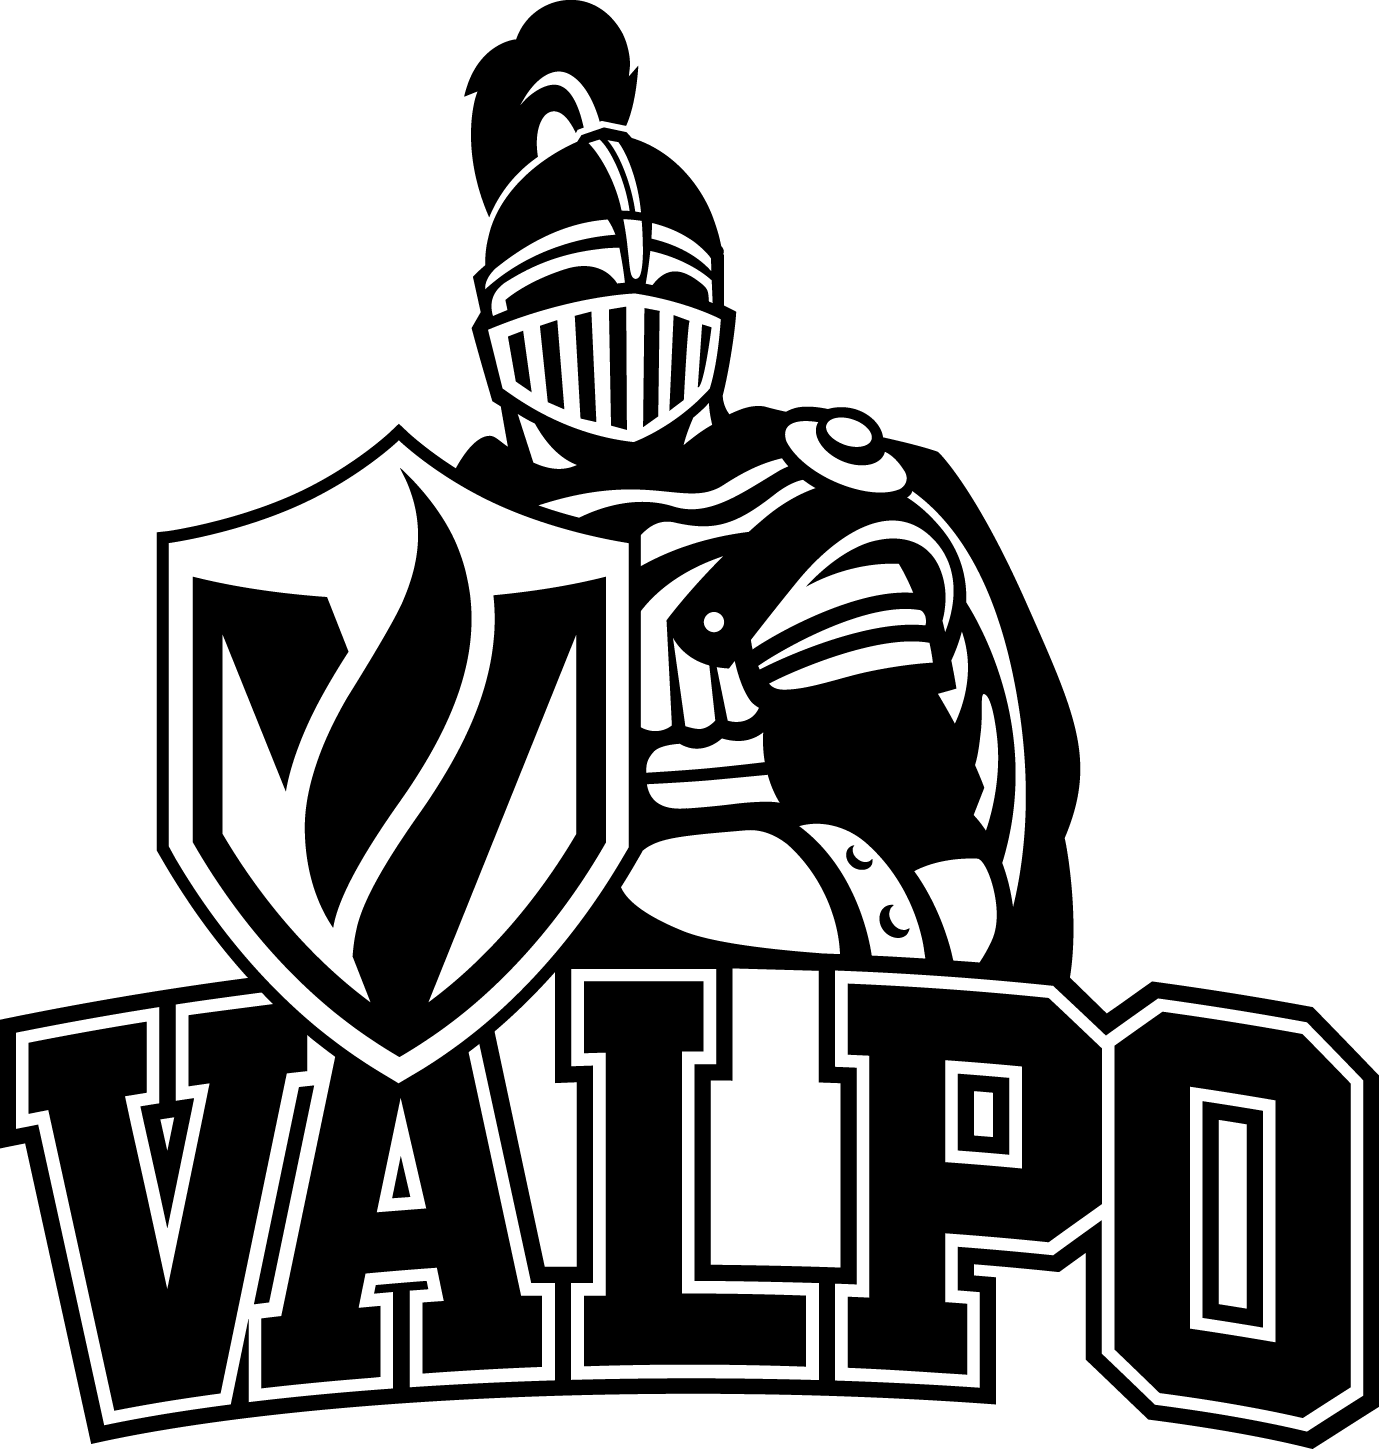 Valpo Logo - Download Logos. Valparaiso University Brand